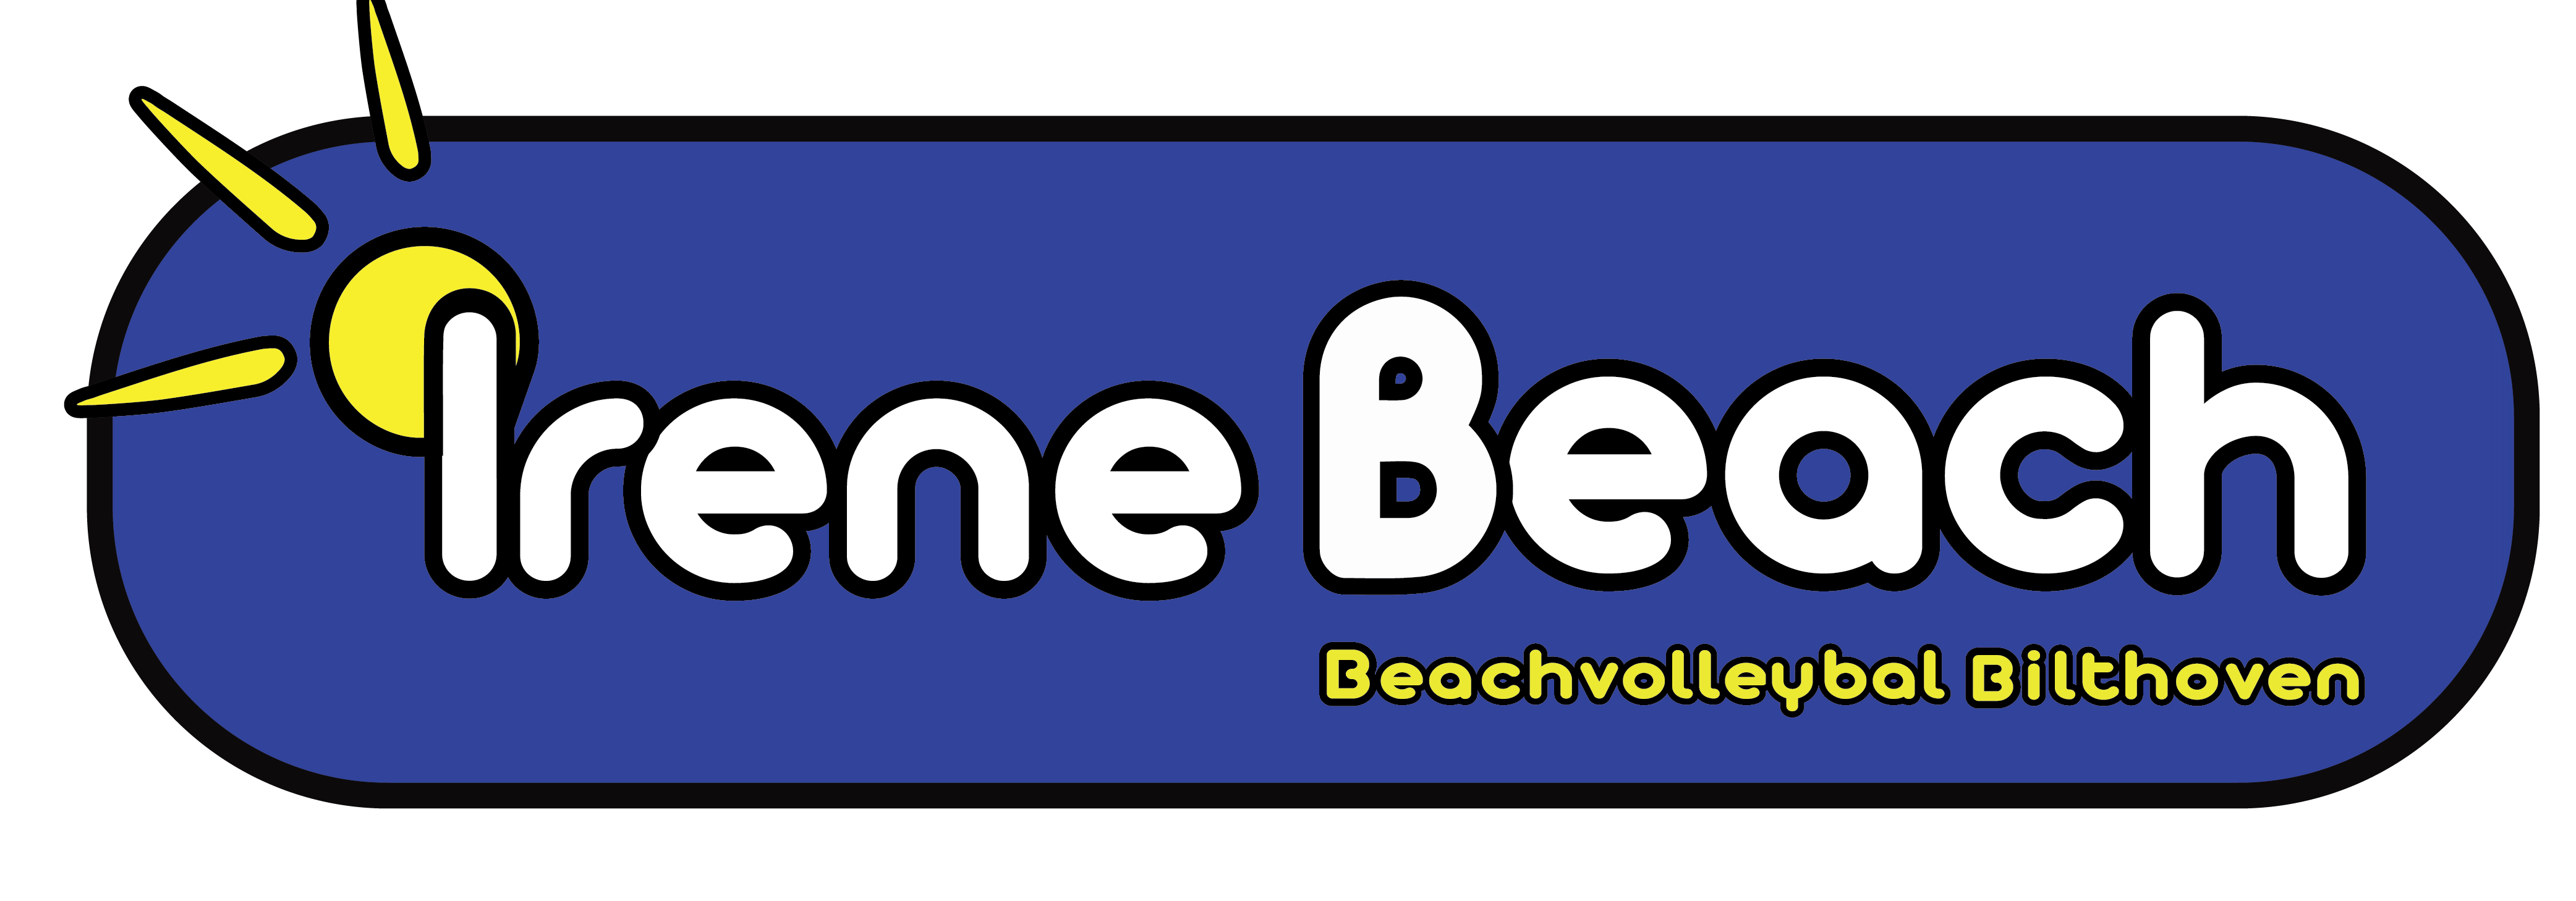 Irene Beach